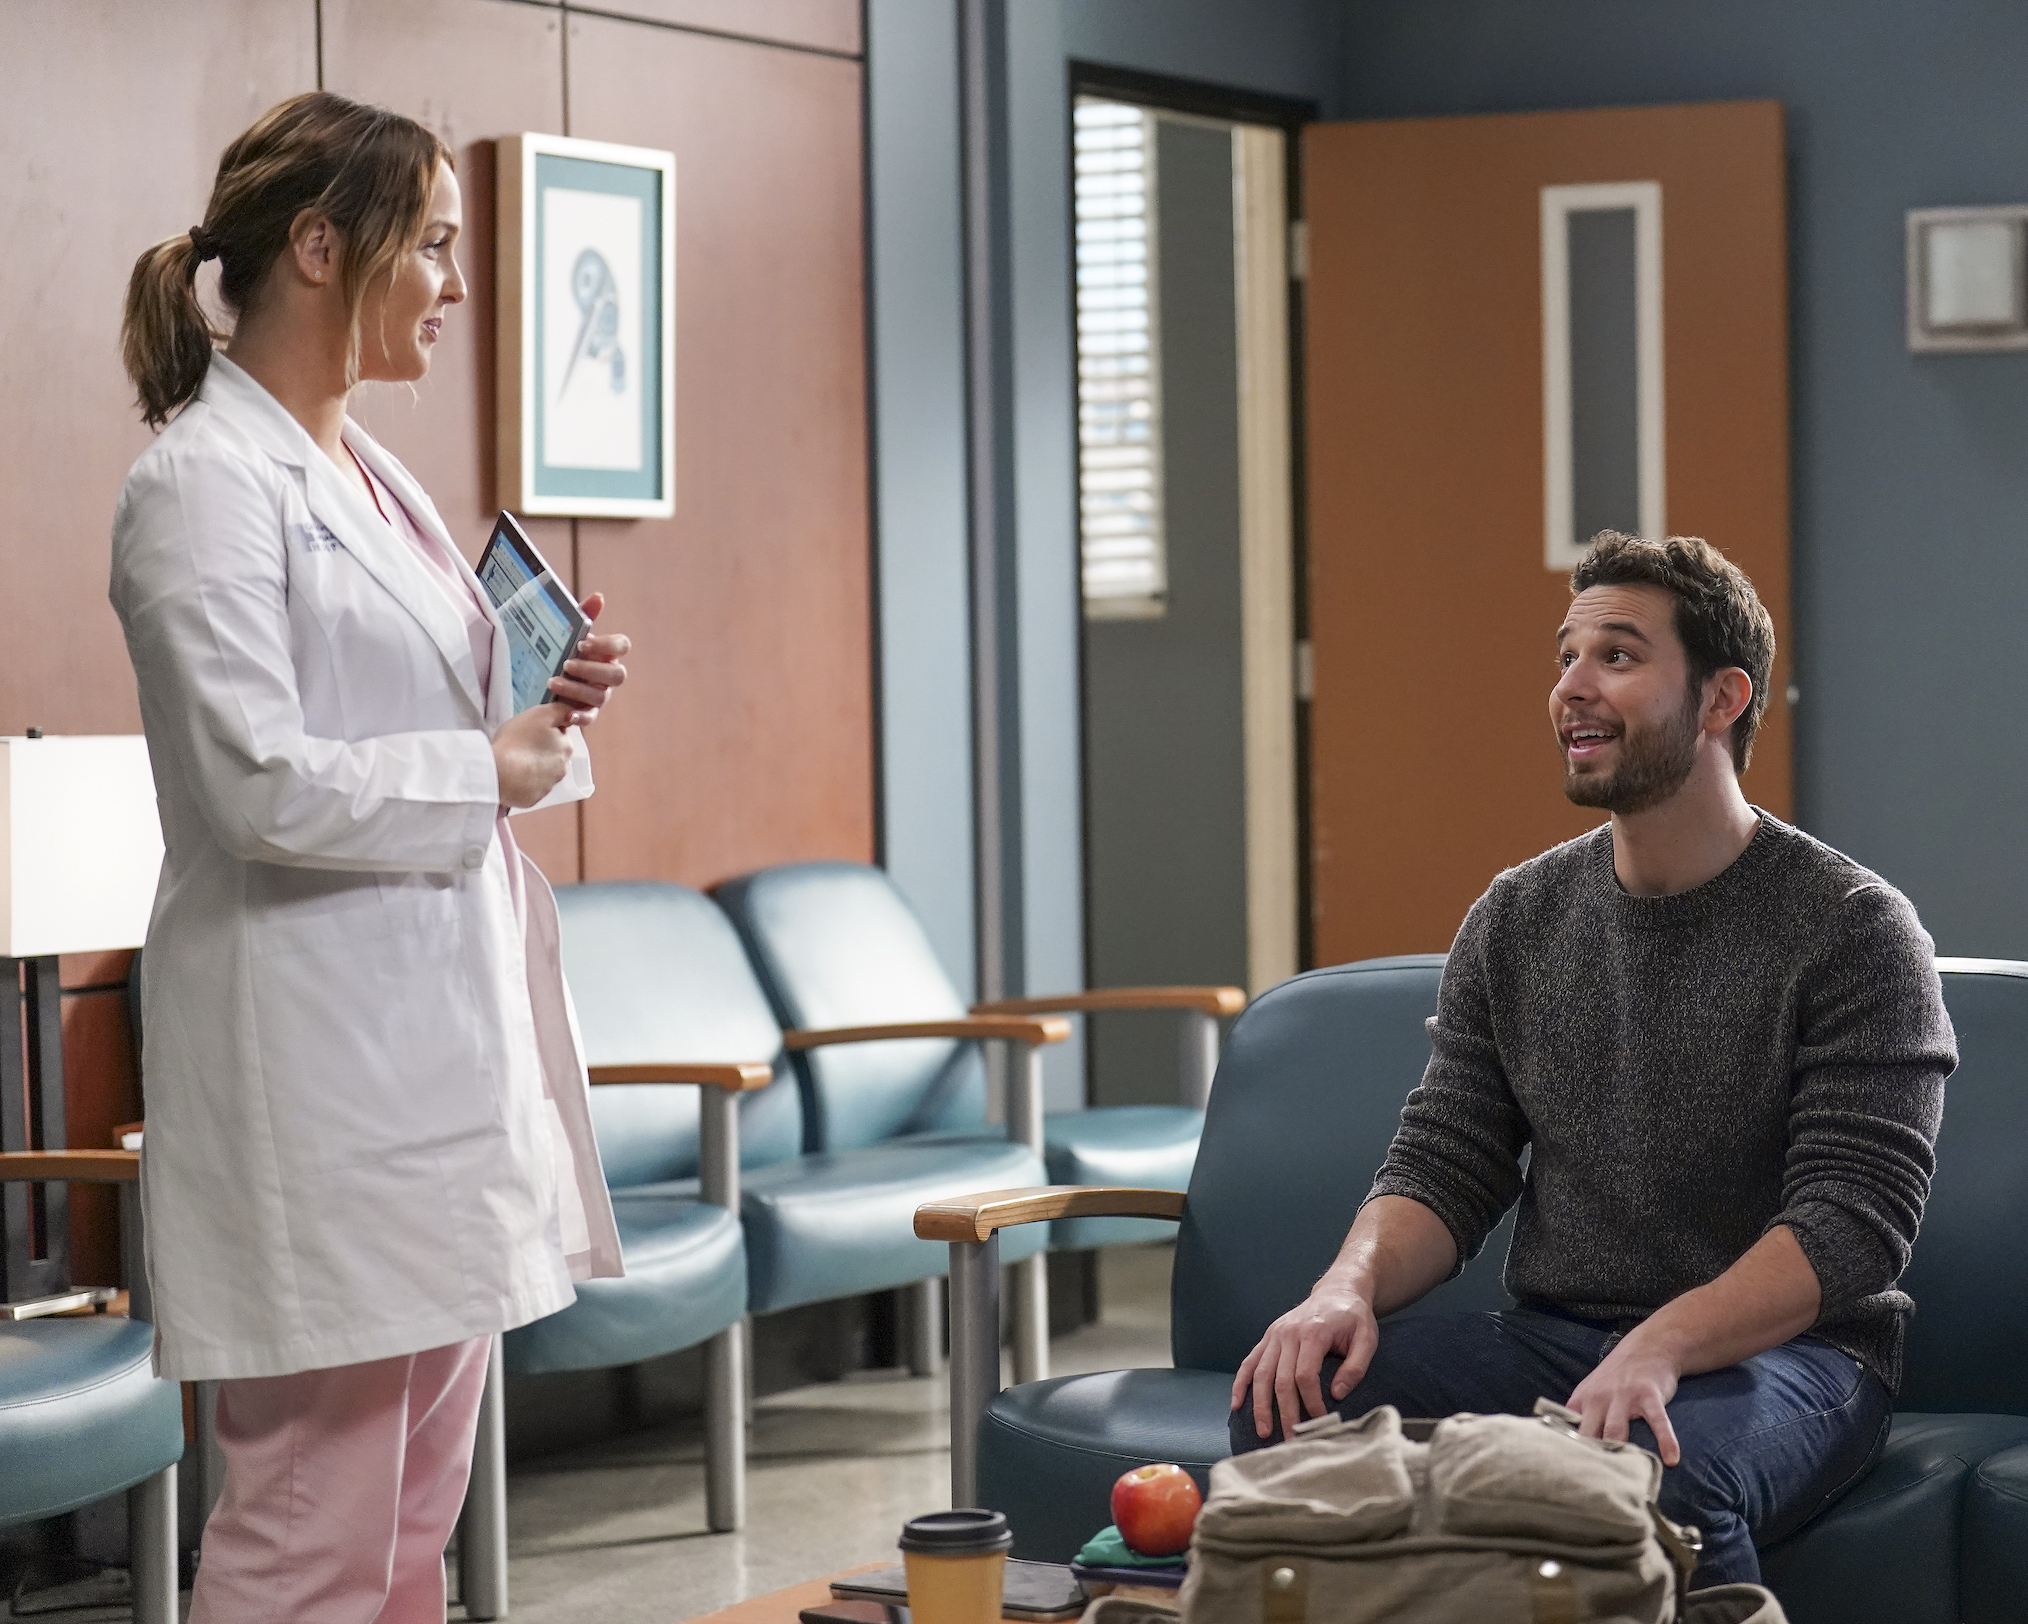 Camilla Luddington as Jo, Skylar Astin as Todd in Grey's Anatomy - 'Put the Squeeze on Me'